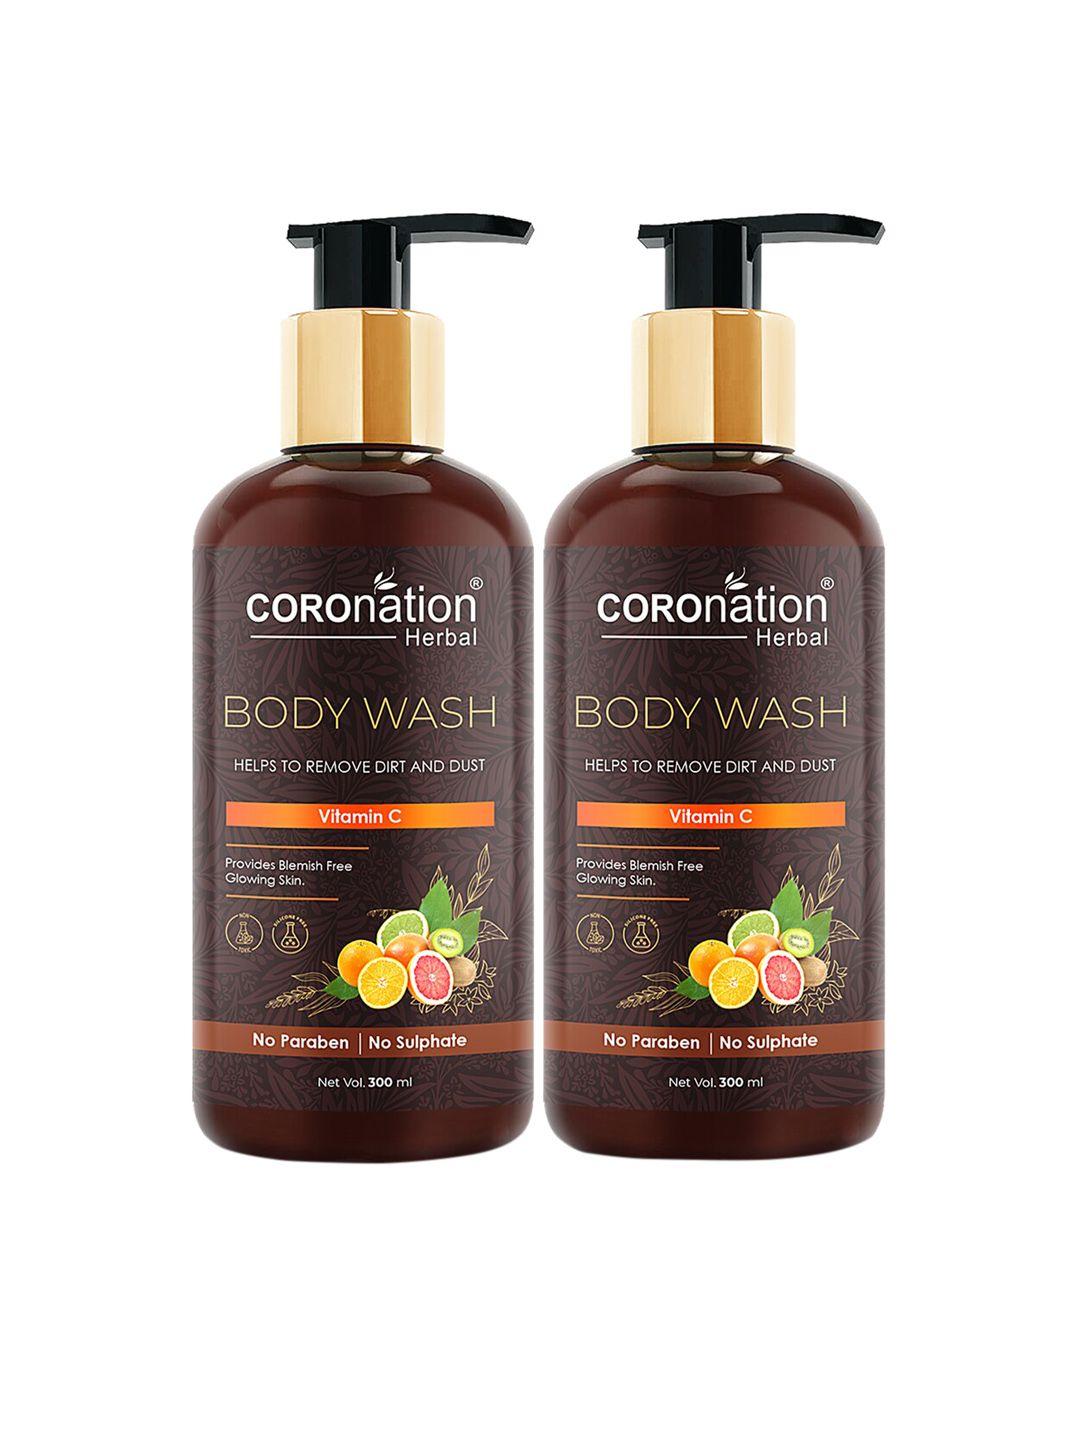 coronation herbal set of 2 vitamin c body wash for blemish free skin - 300ml each